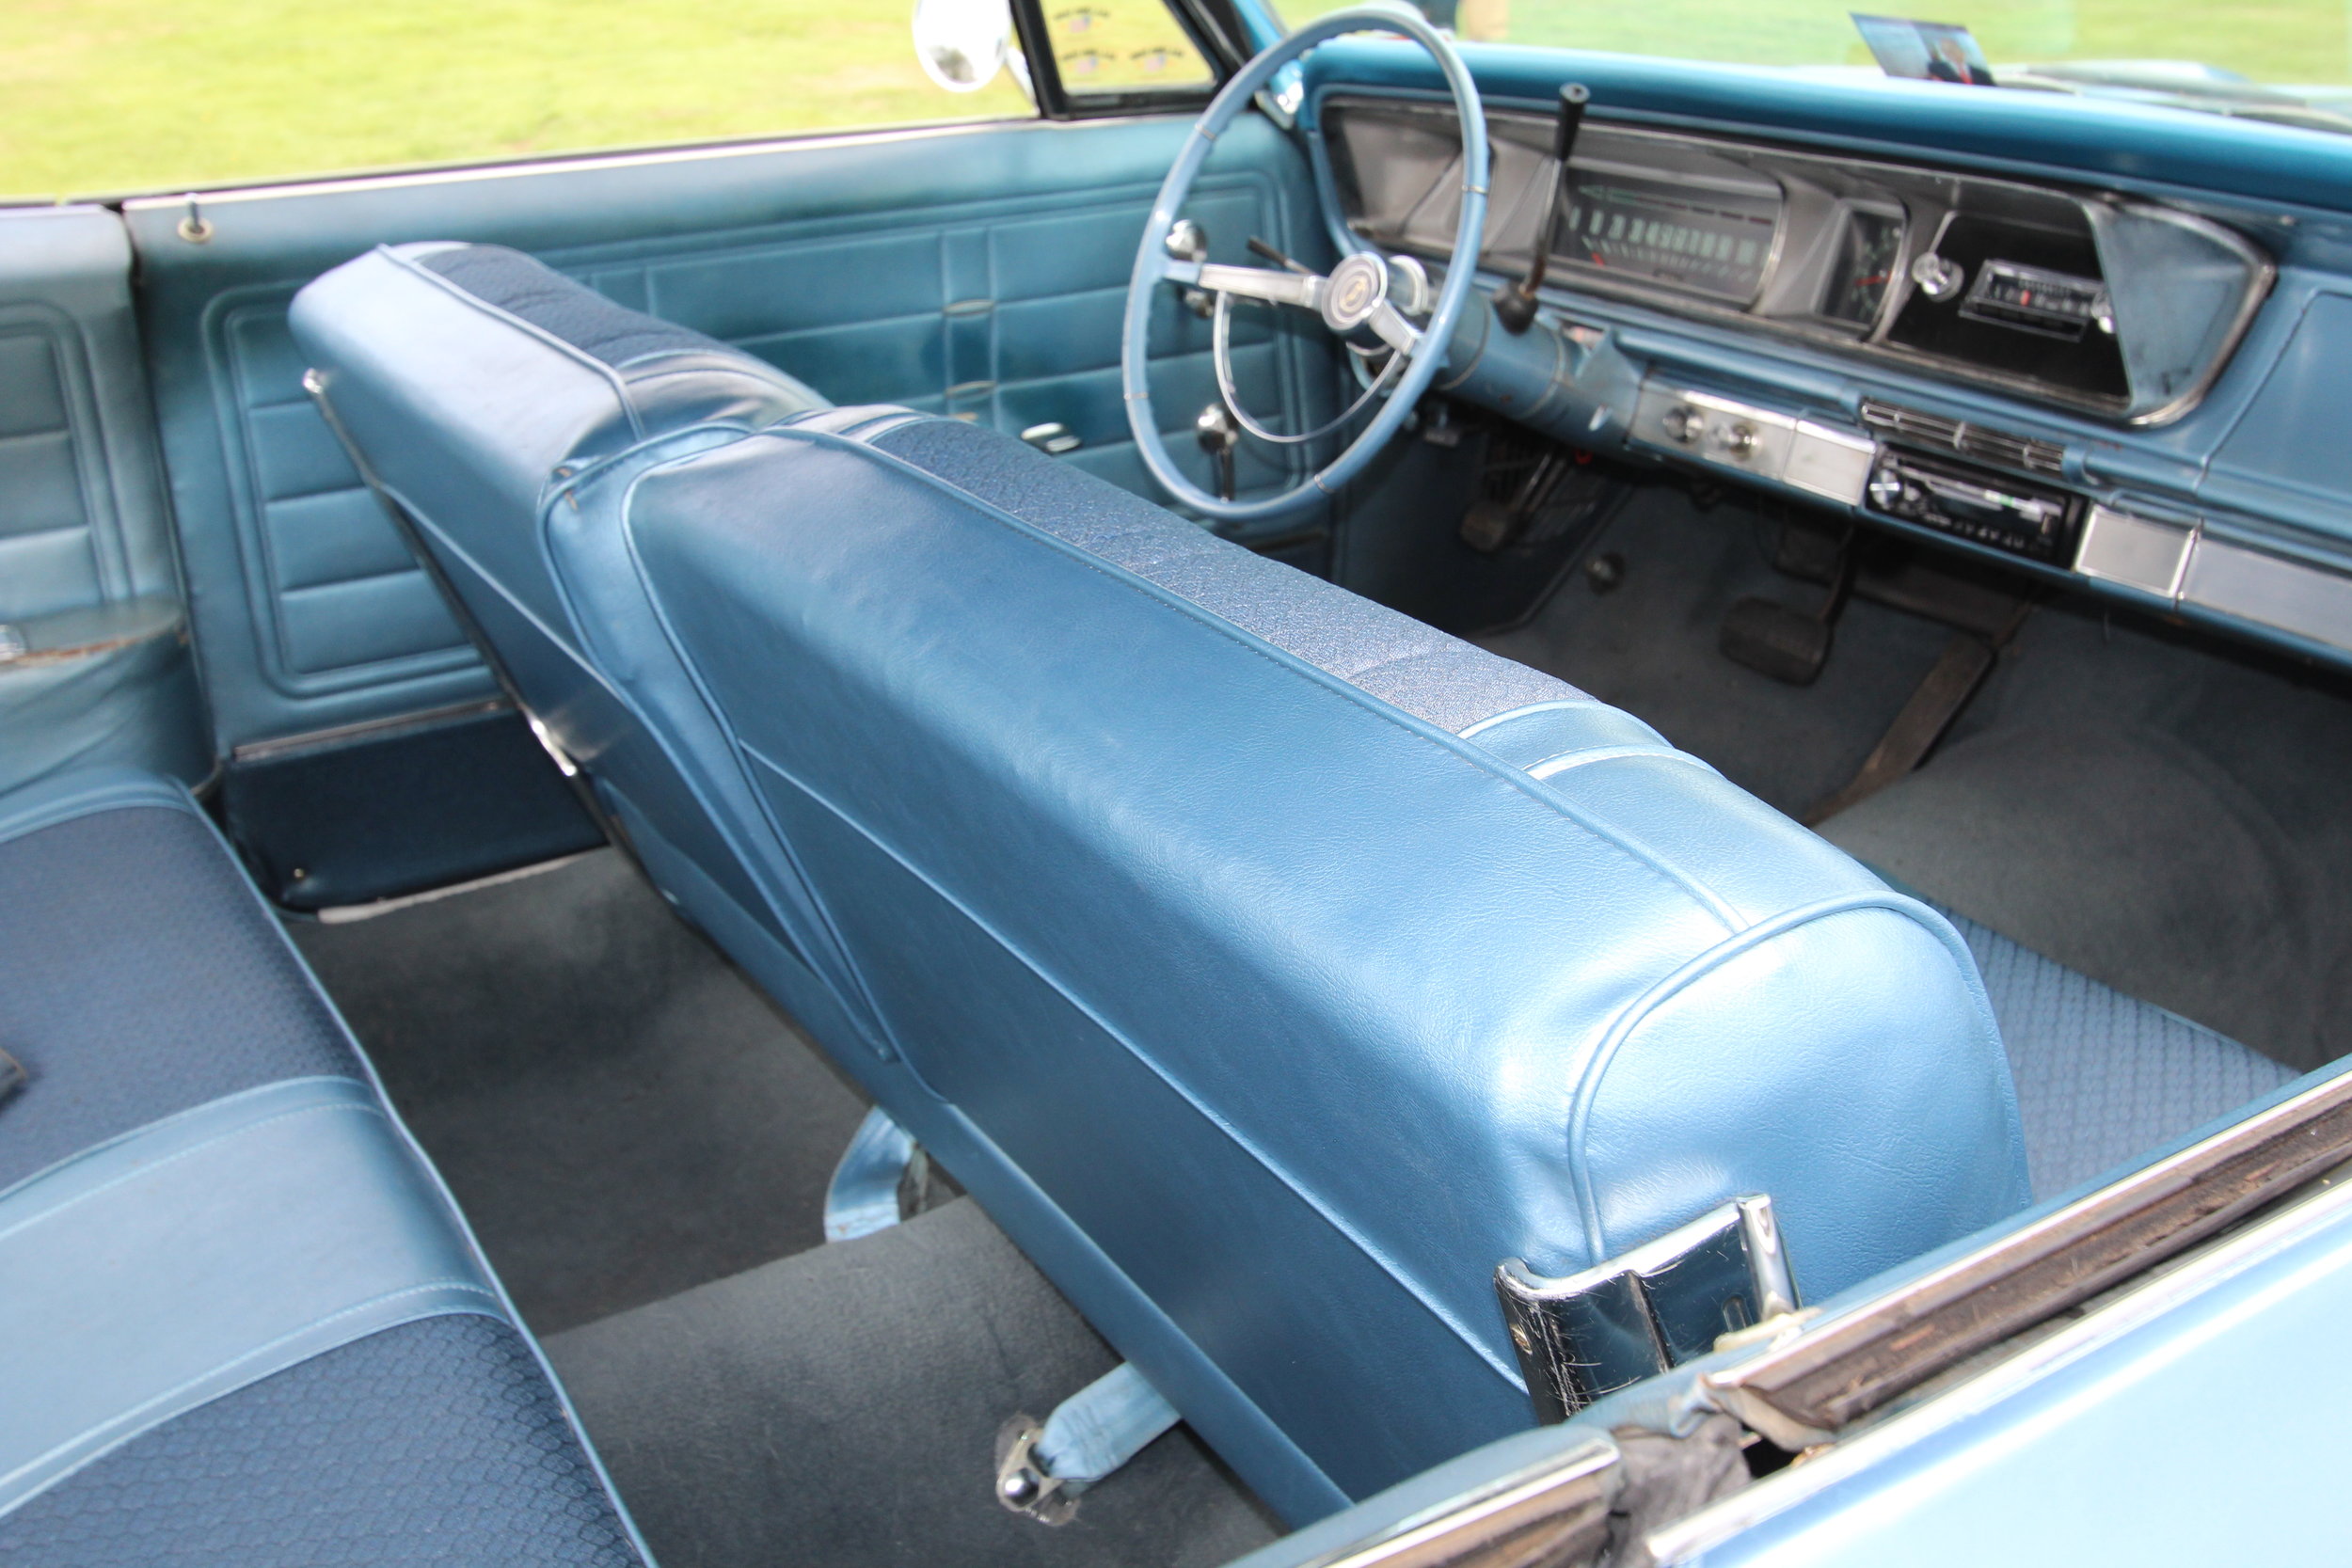  Cool cruiser: subtle blues for David Haywood’s mint Chevrolet Impala 